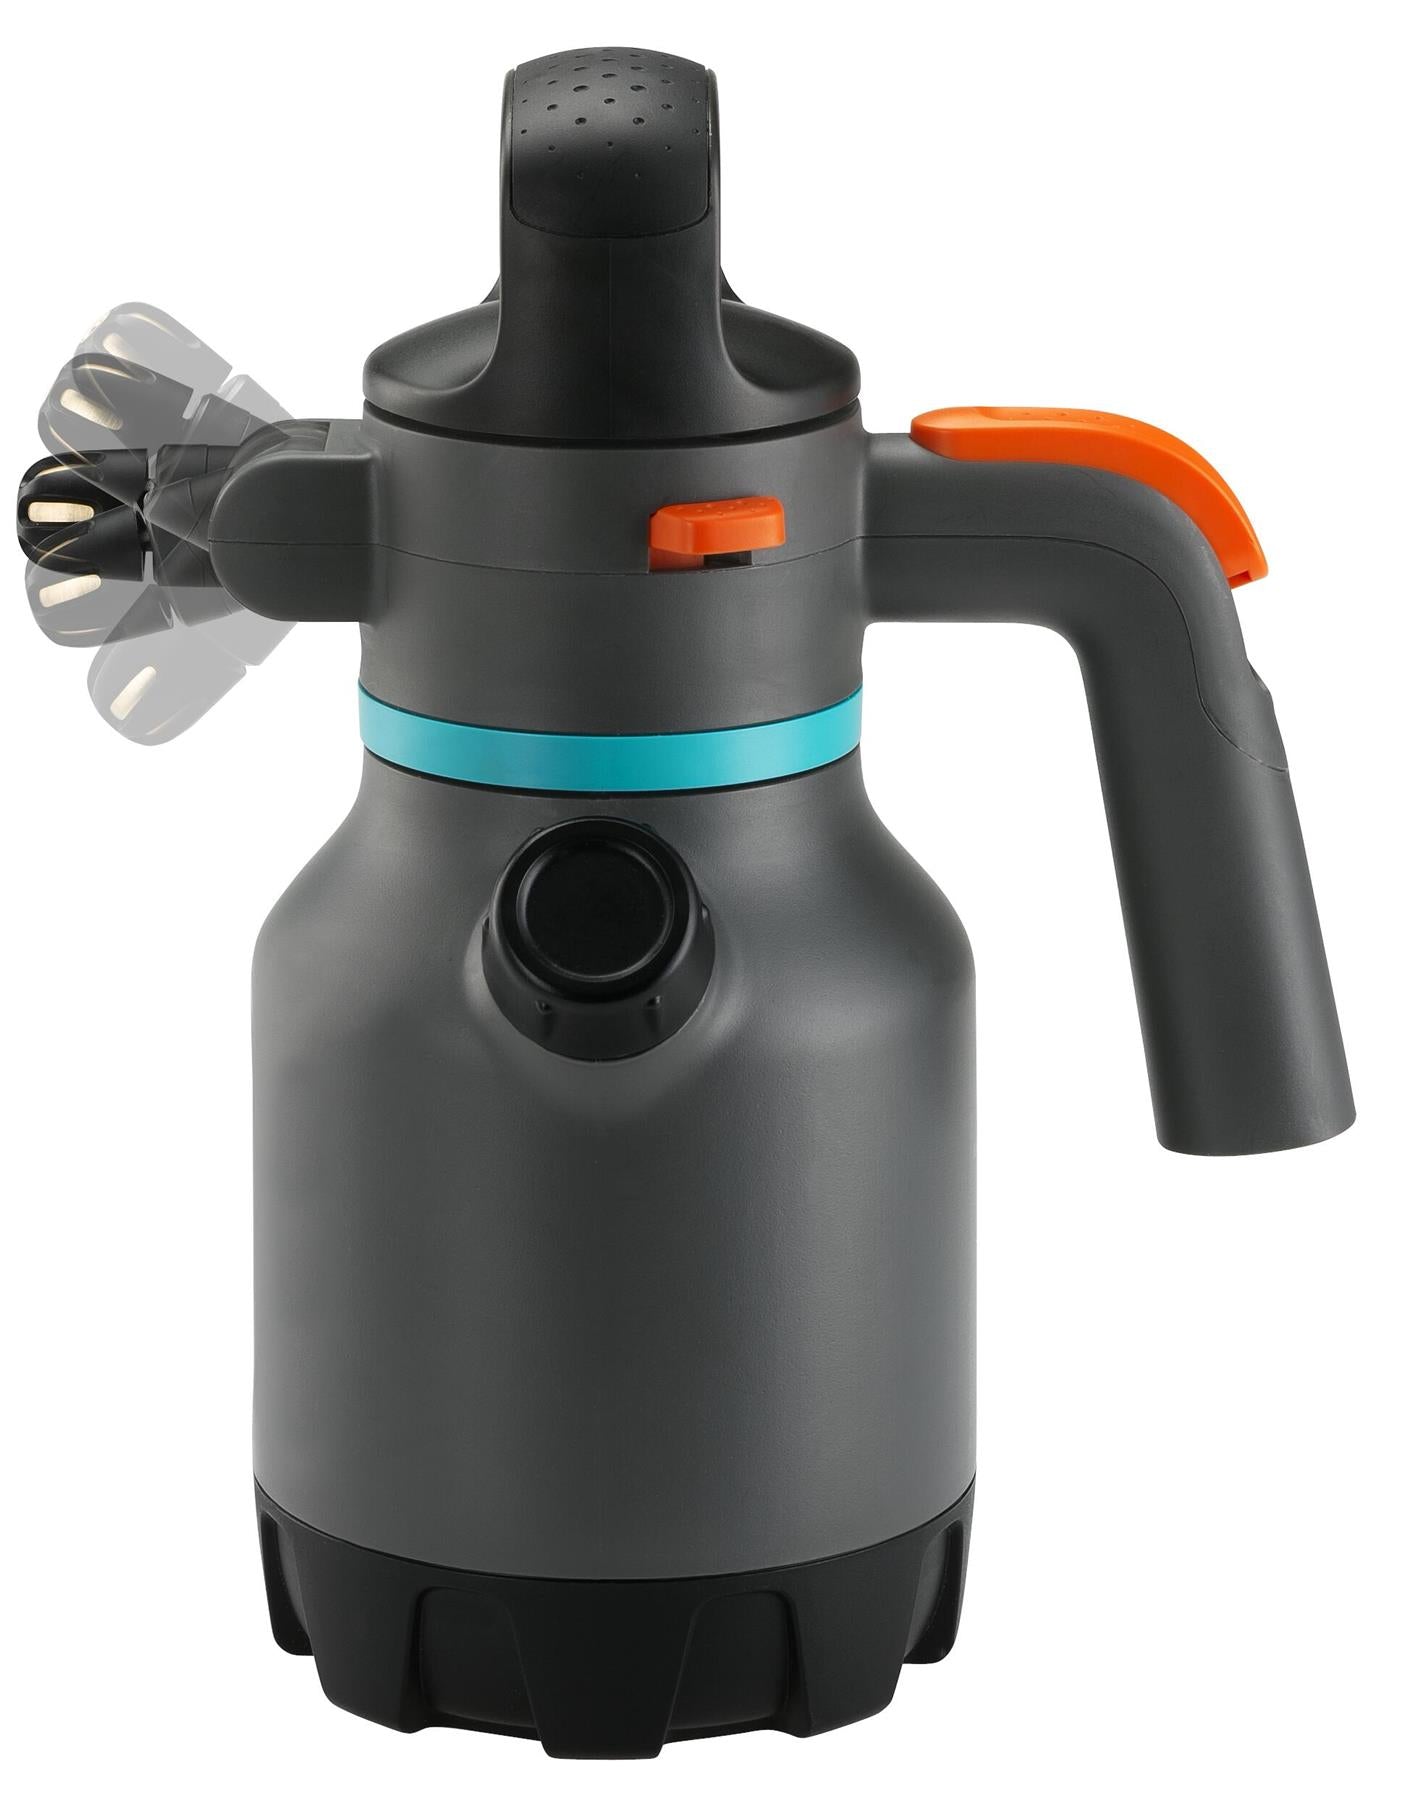 GARDENA Pressure Sprayer 1.25L